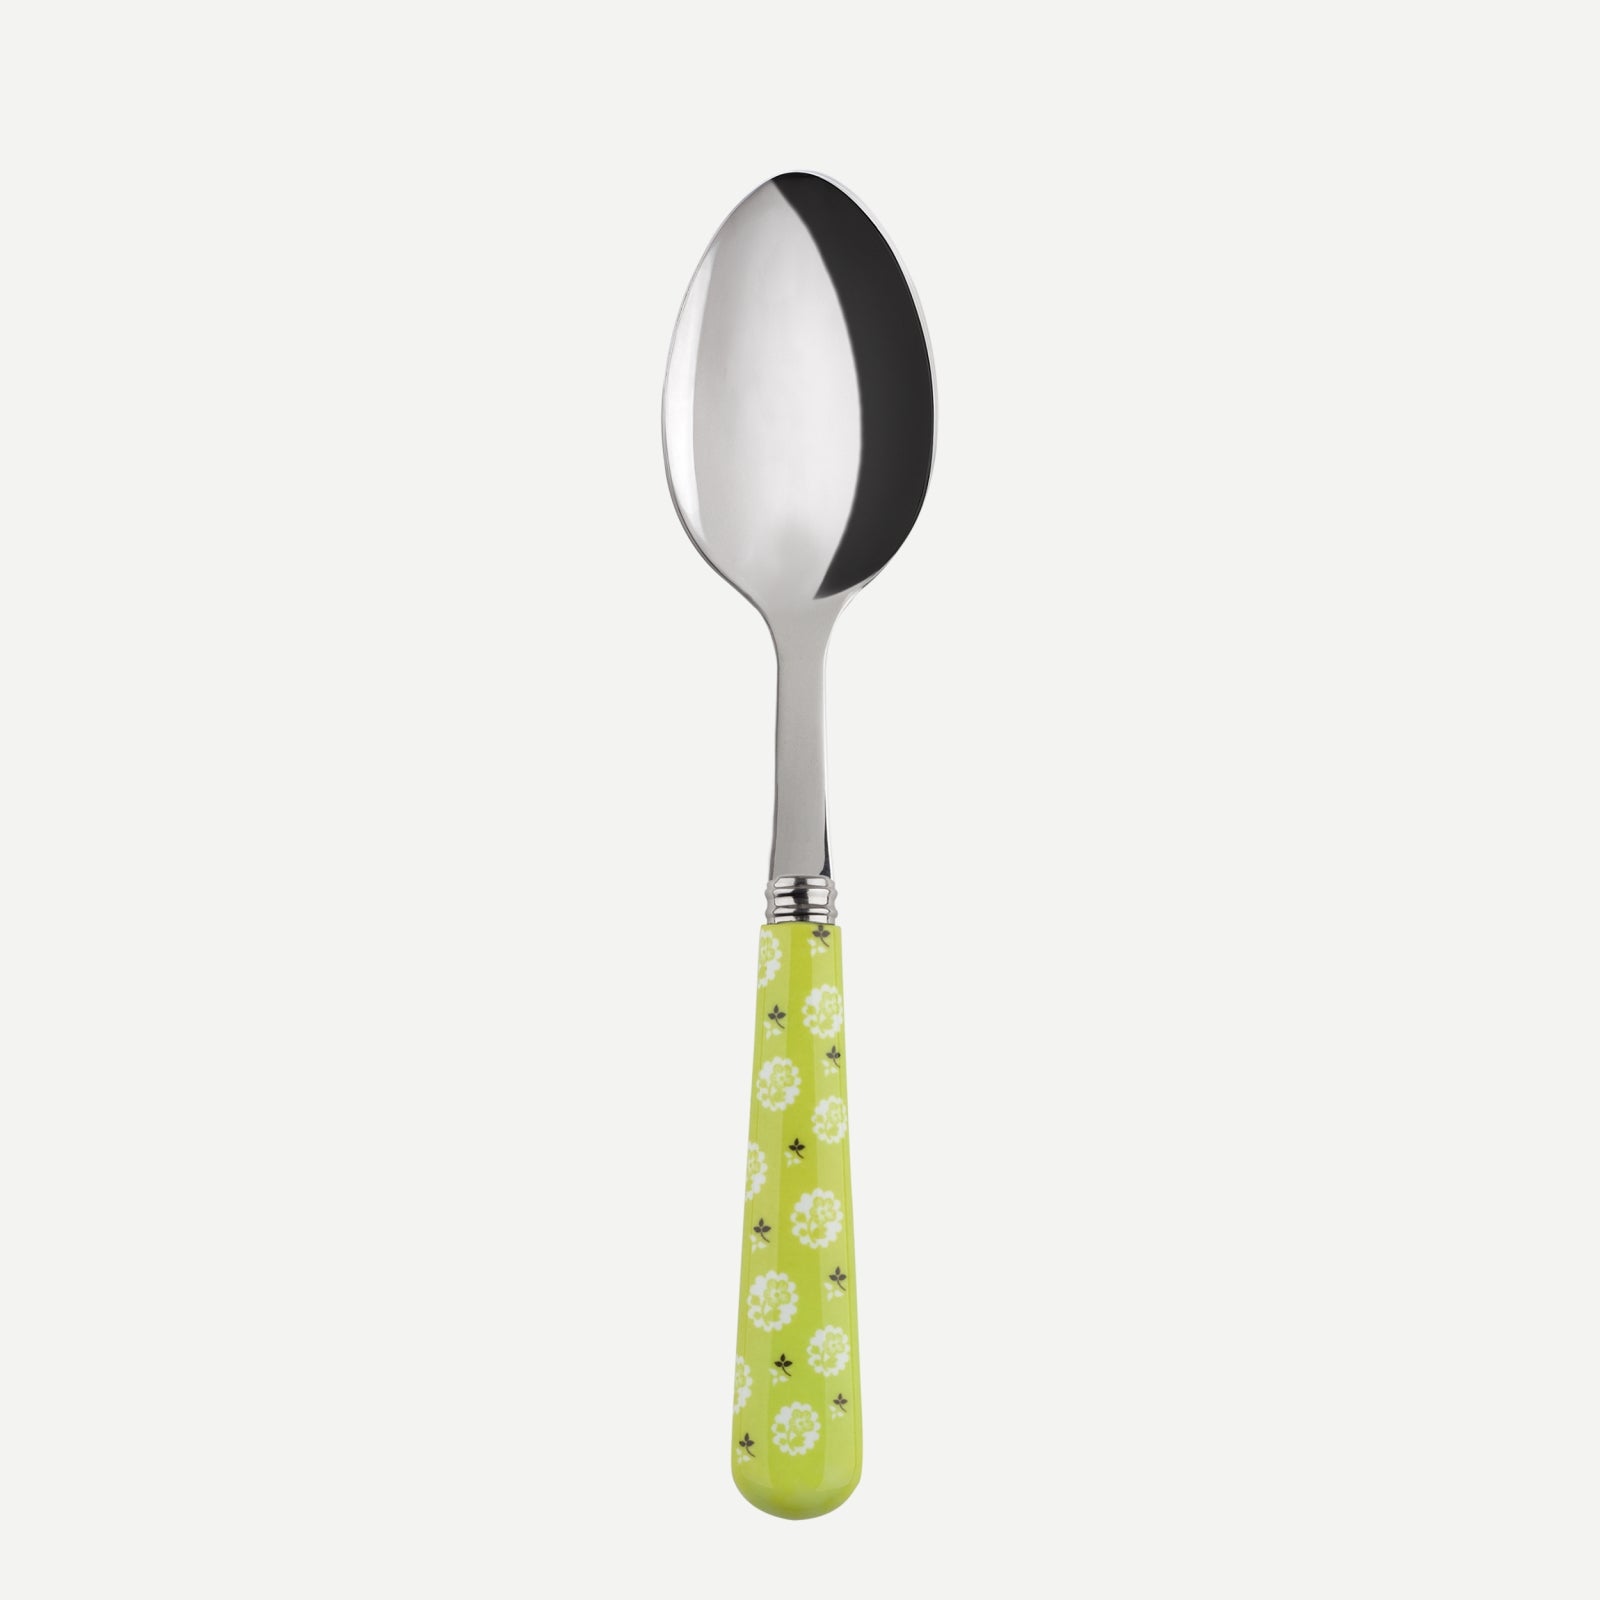 Cake spoon - Provencal - Light green